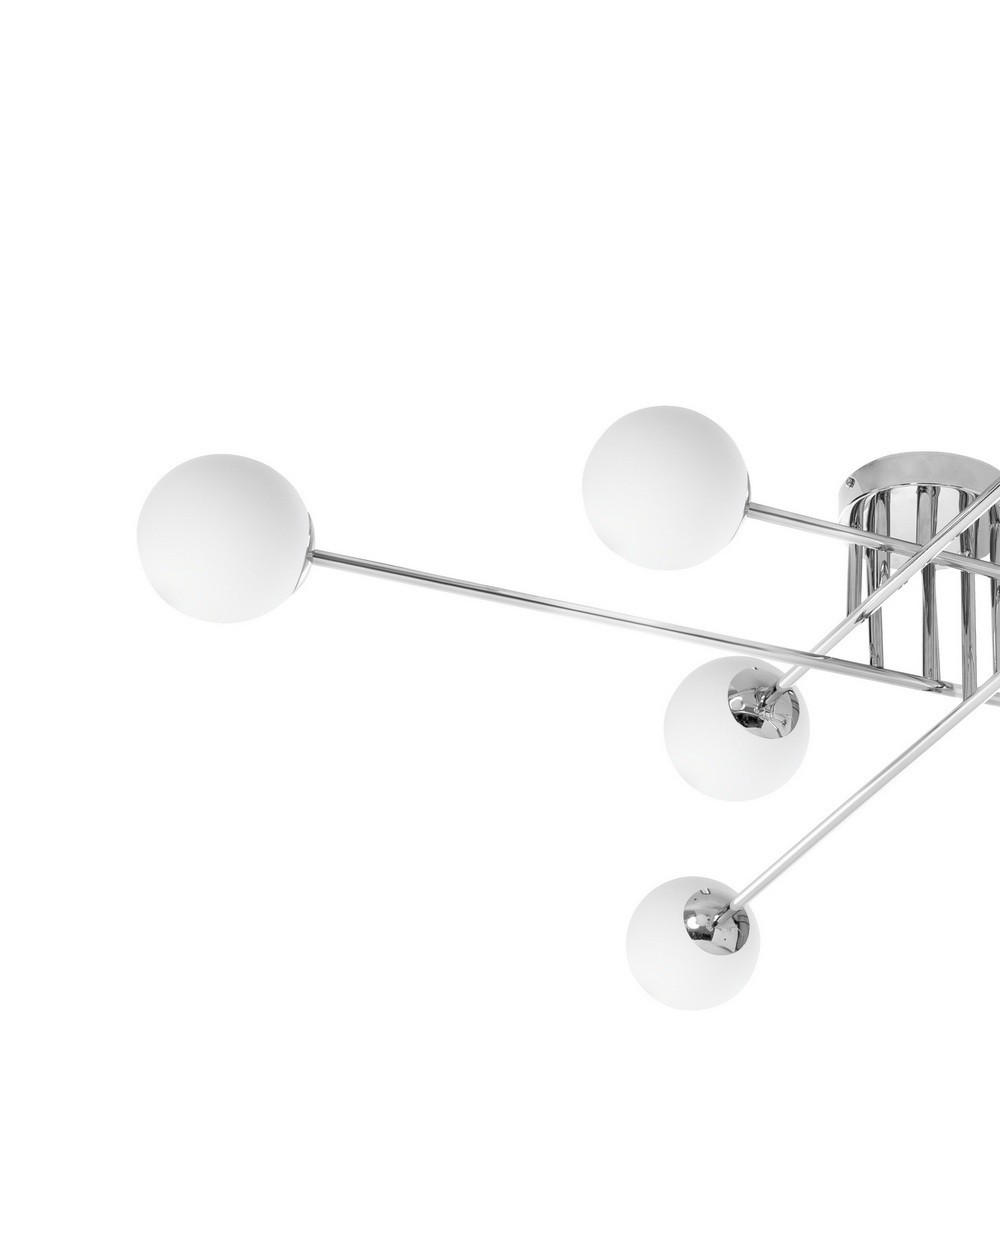 ASTRA 8 - Lampa sufitowa ośmiopunktowa srebrna